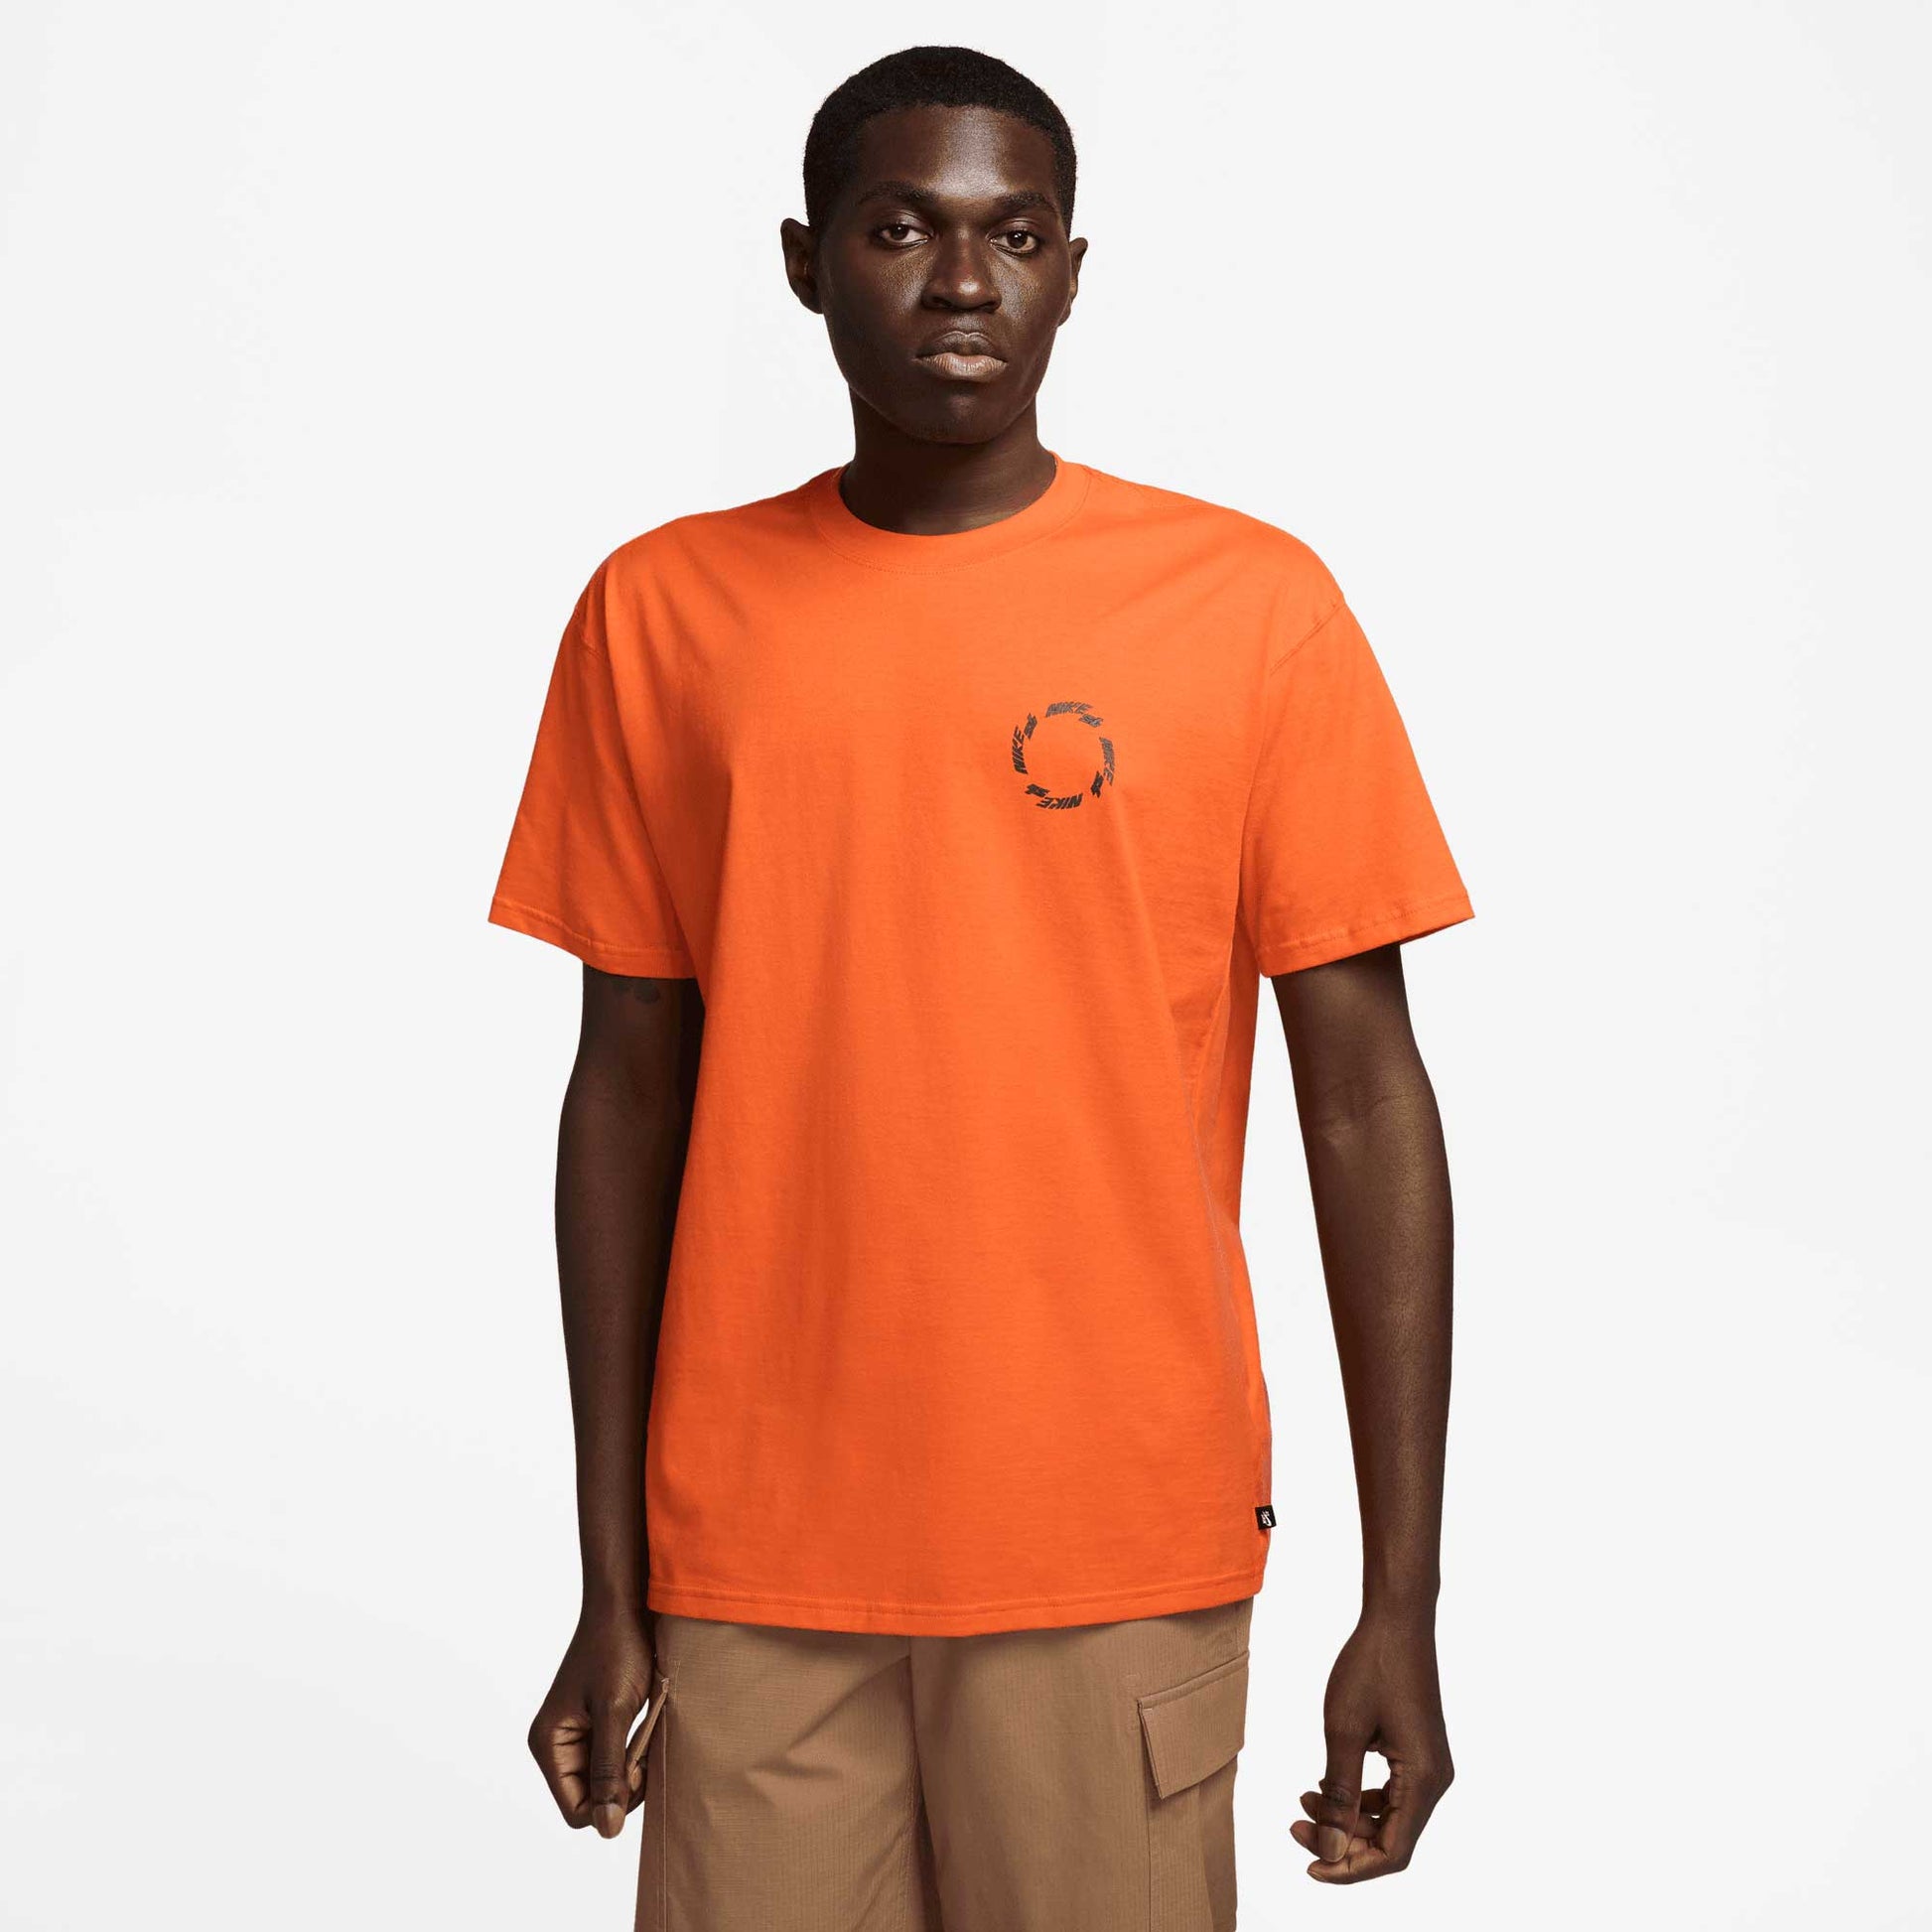 Nike SB Wheel T-Shirt, safety orange - Tiki Room Skateboards - 5